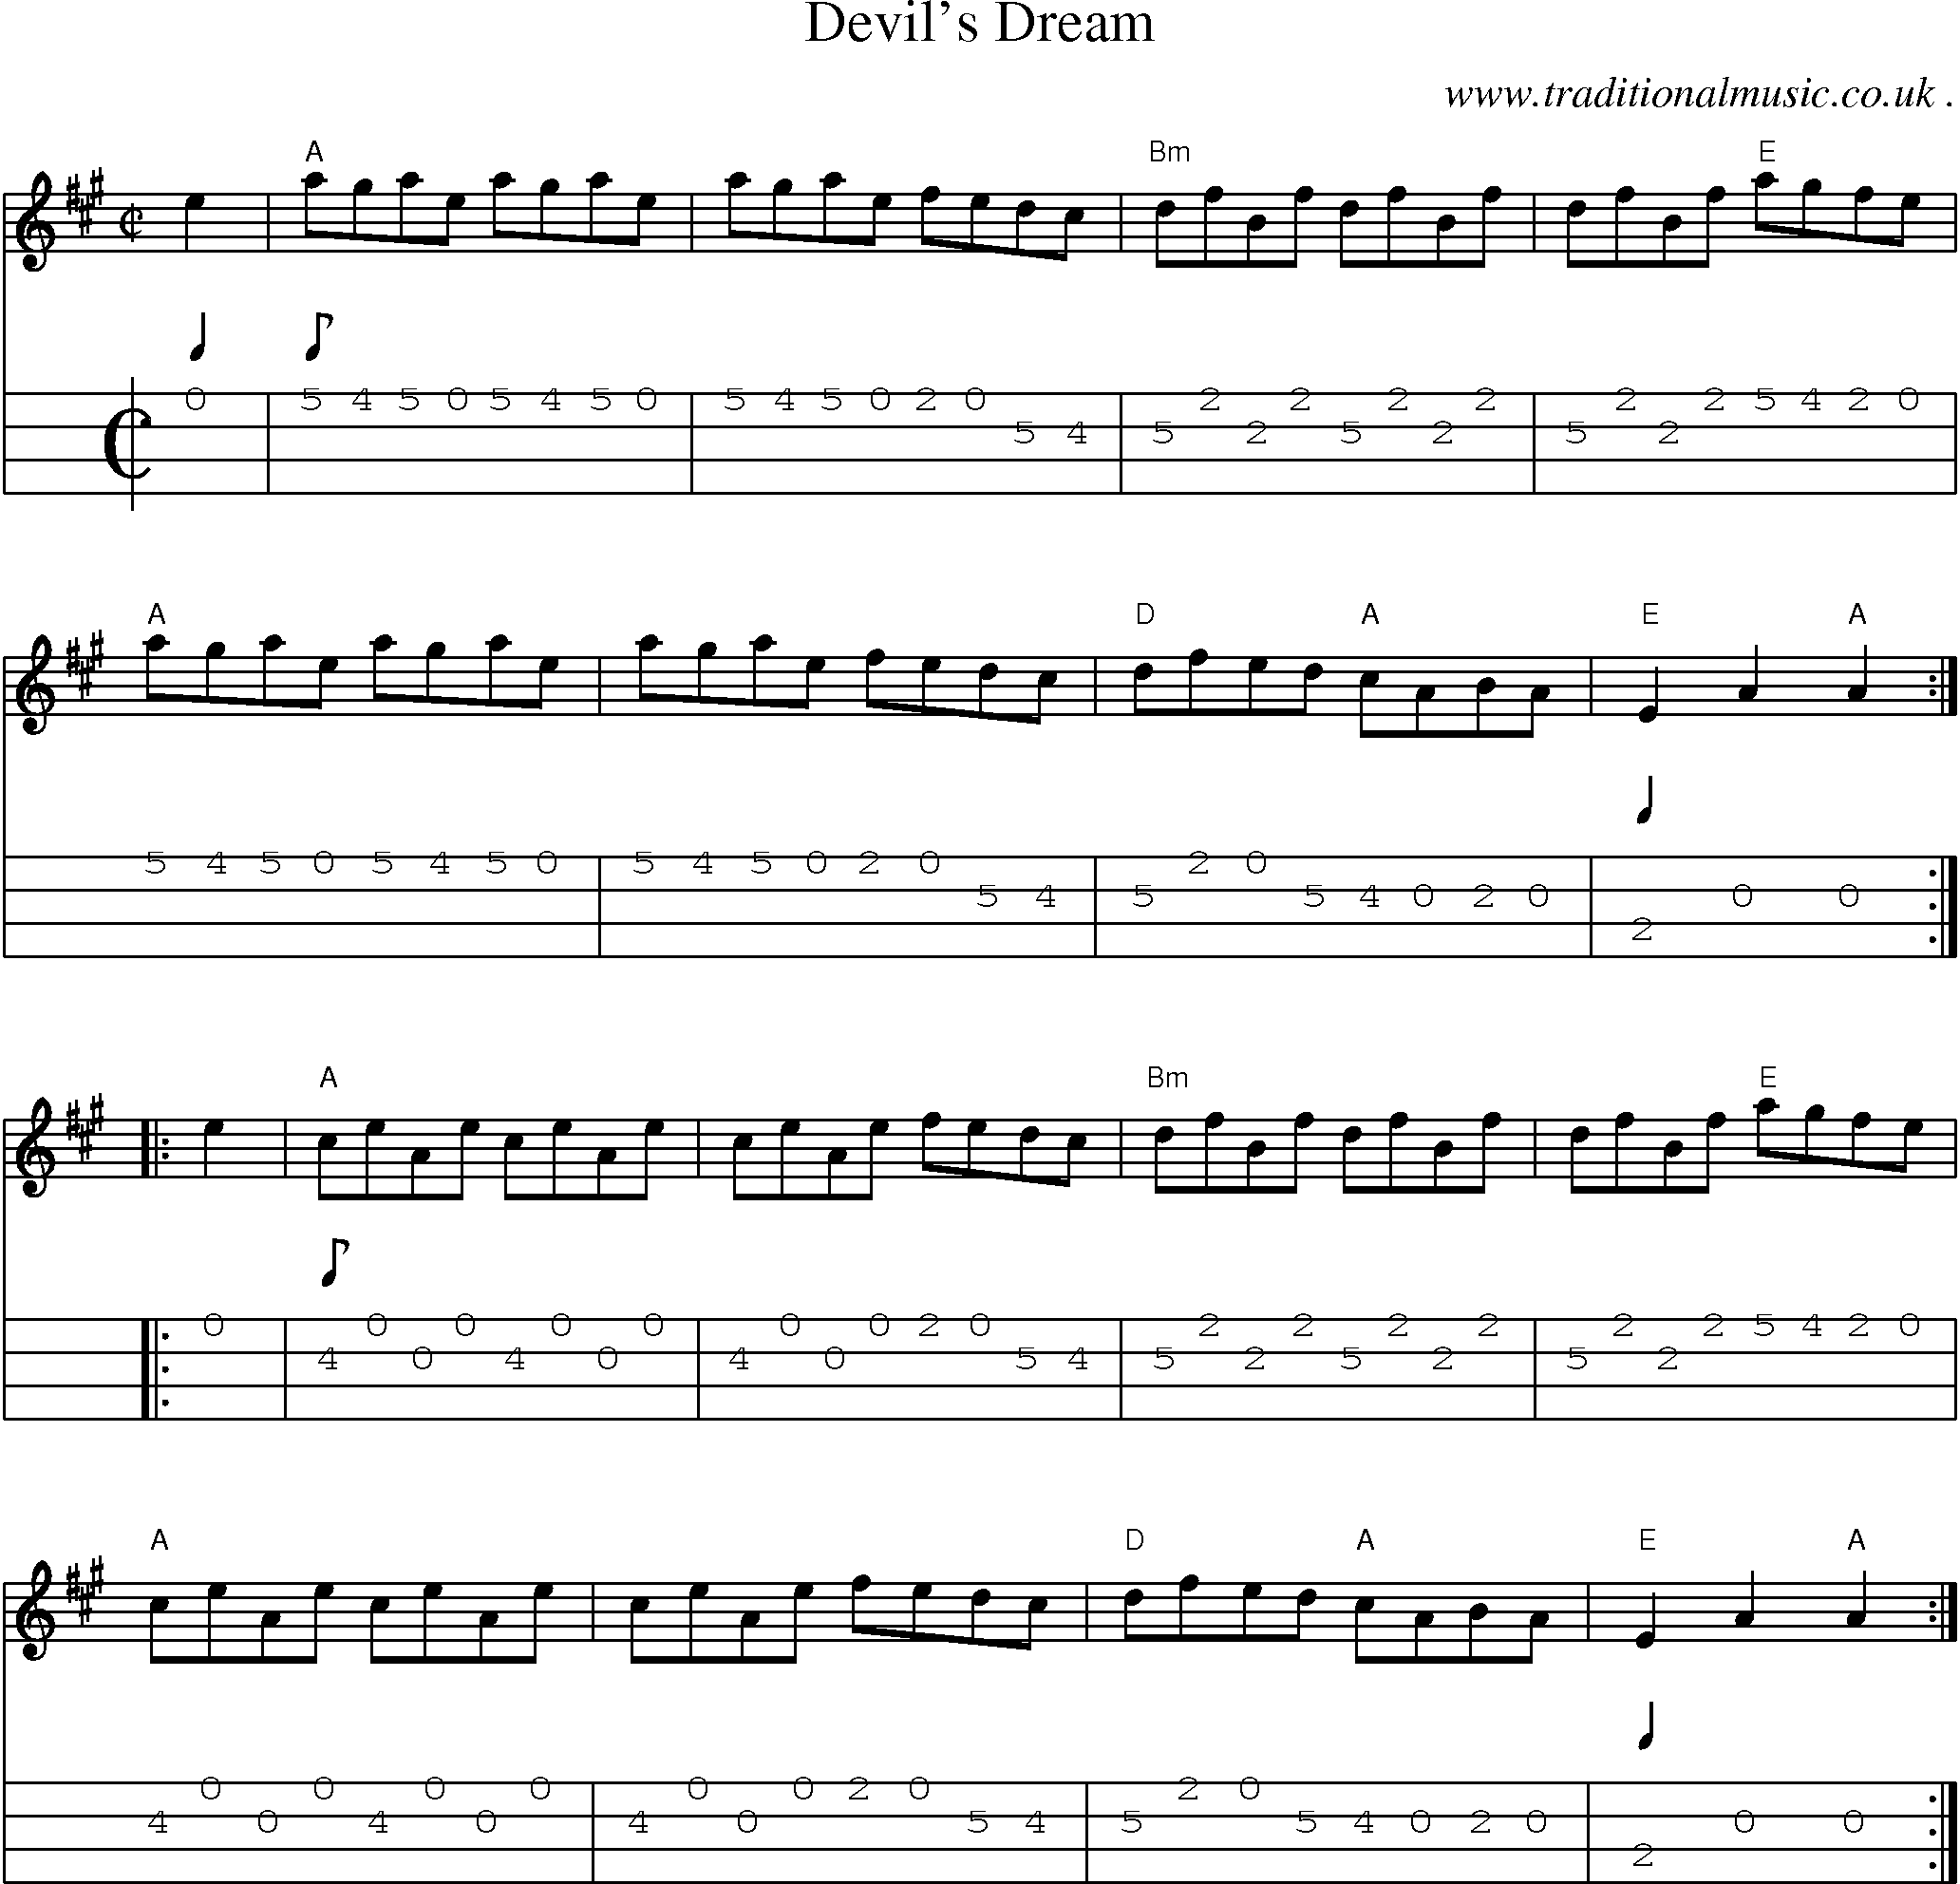 Music Score and Mandolin Tabs for Devils Dream